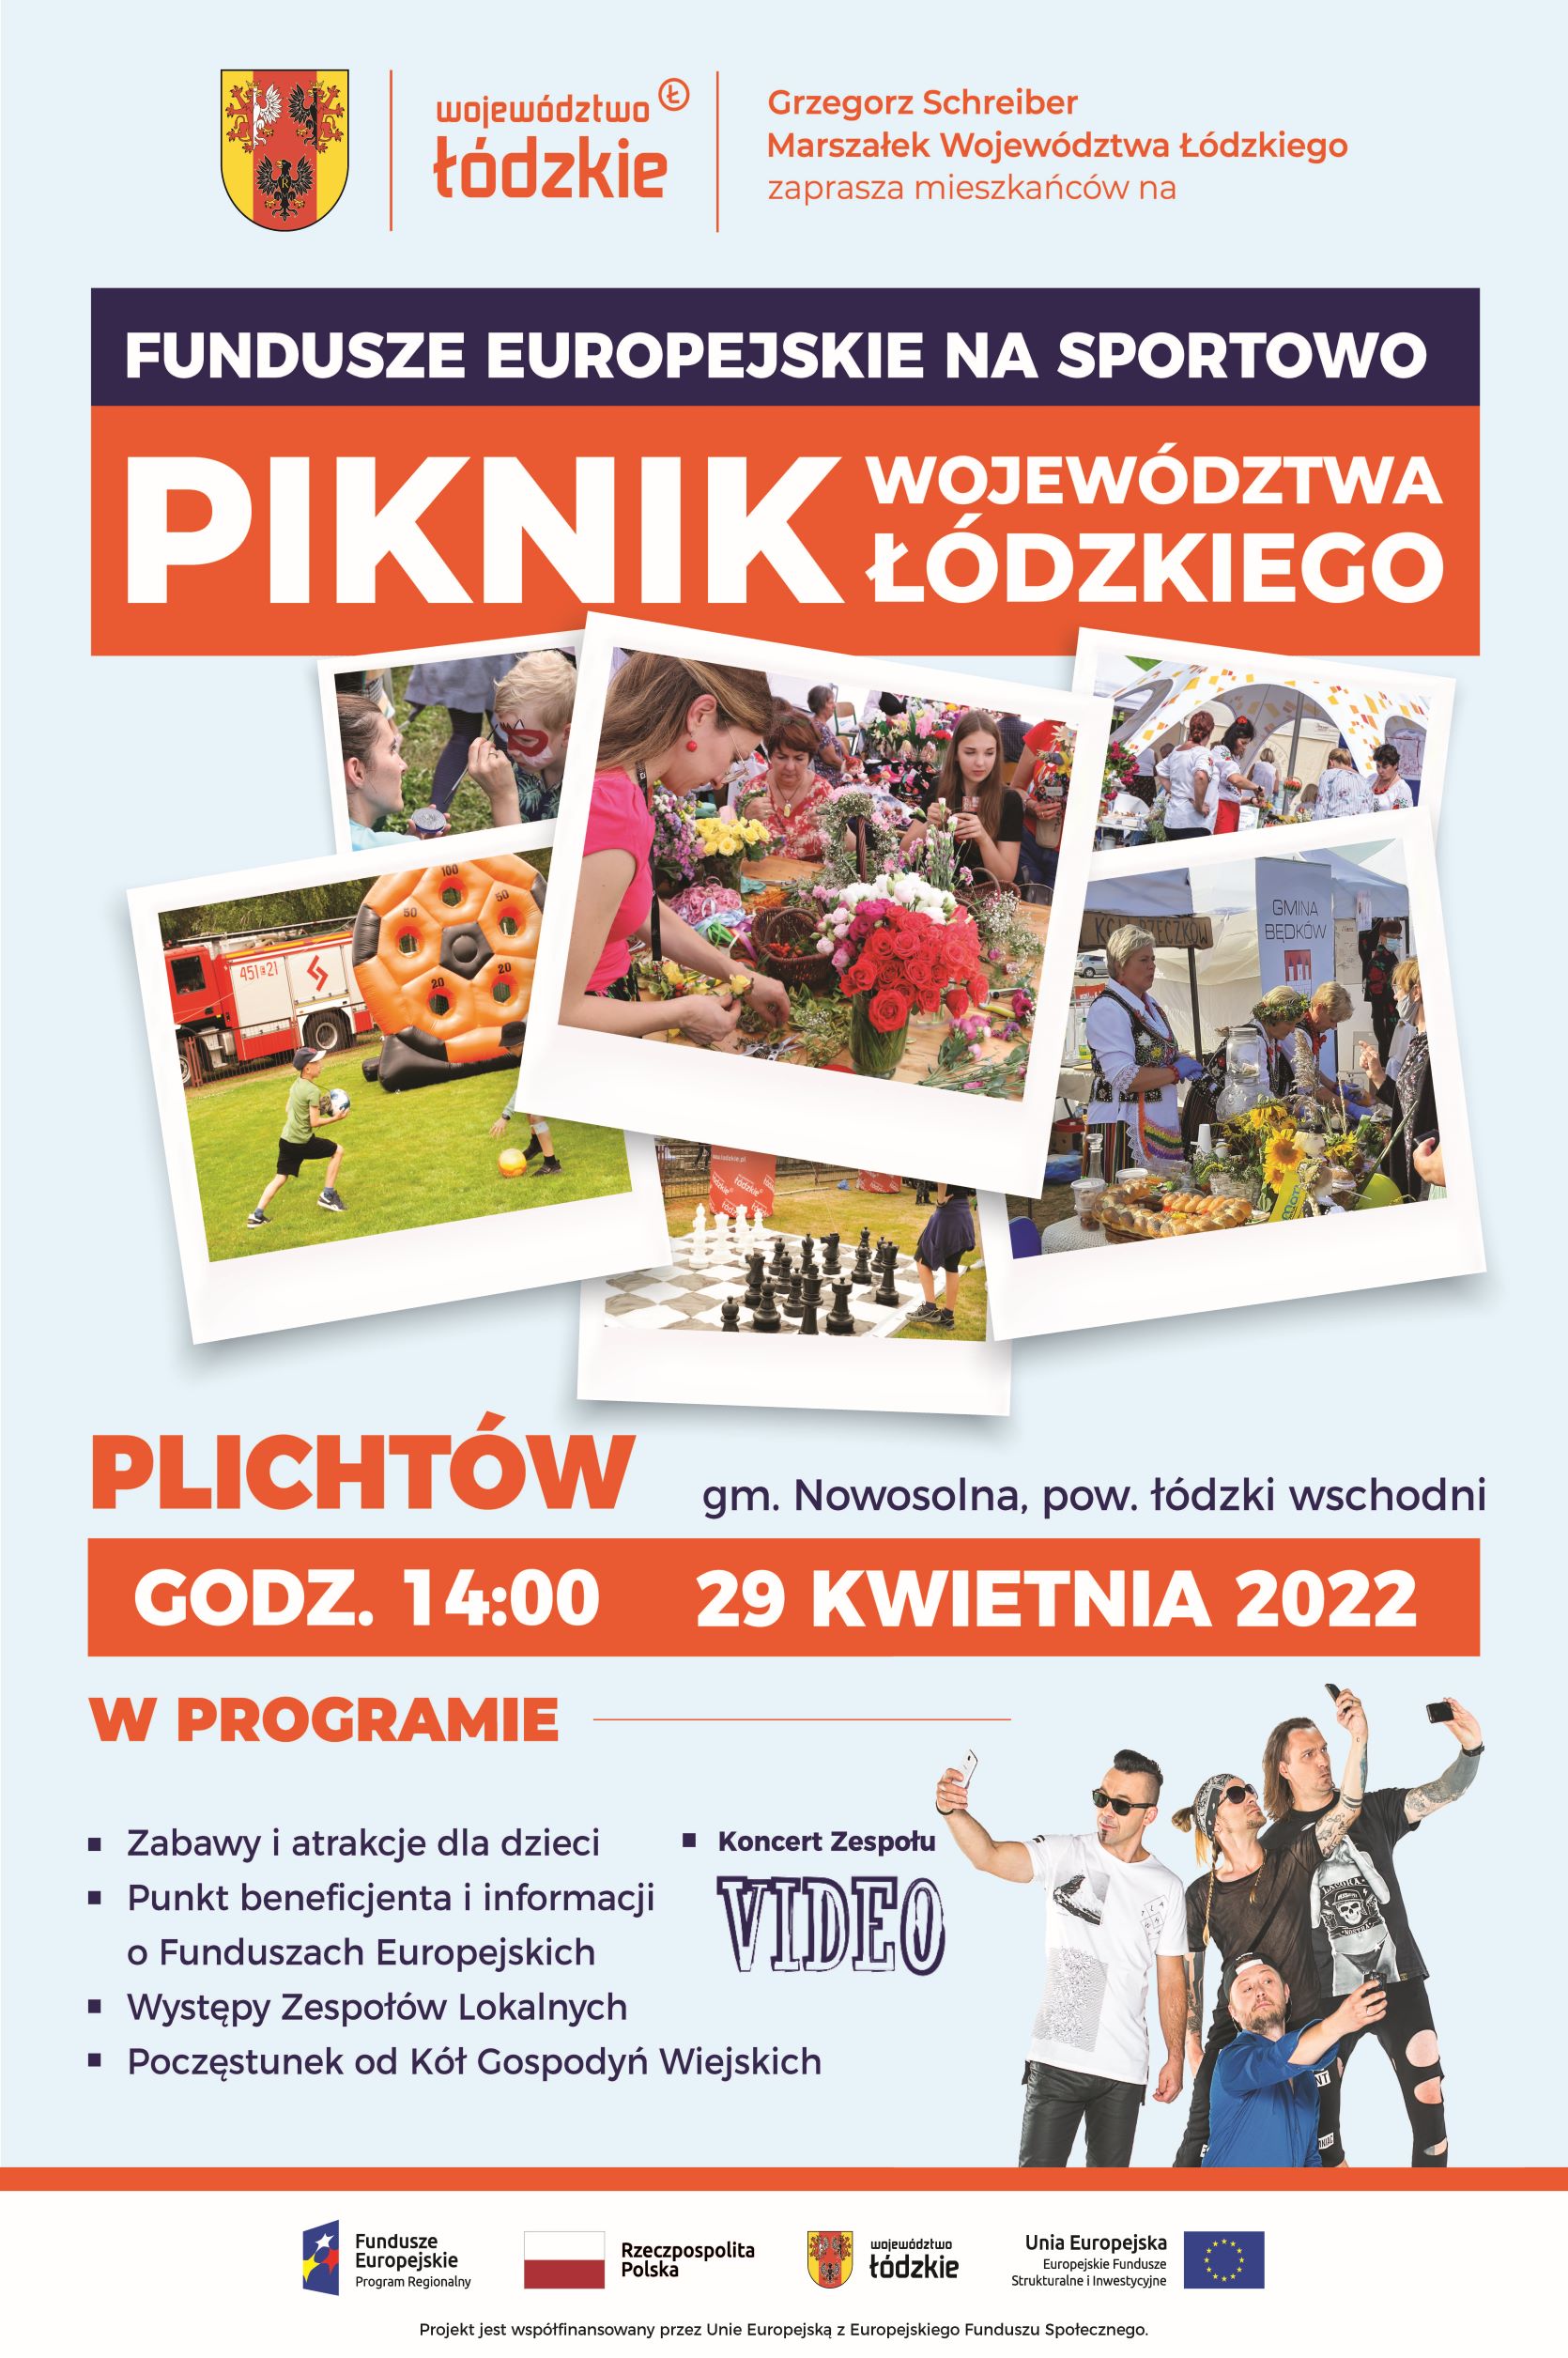 Piknik plakat Plichtow a.jpg (534 KB)